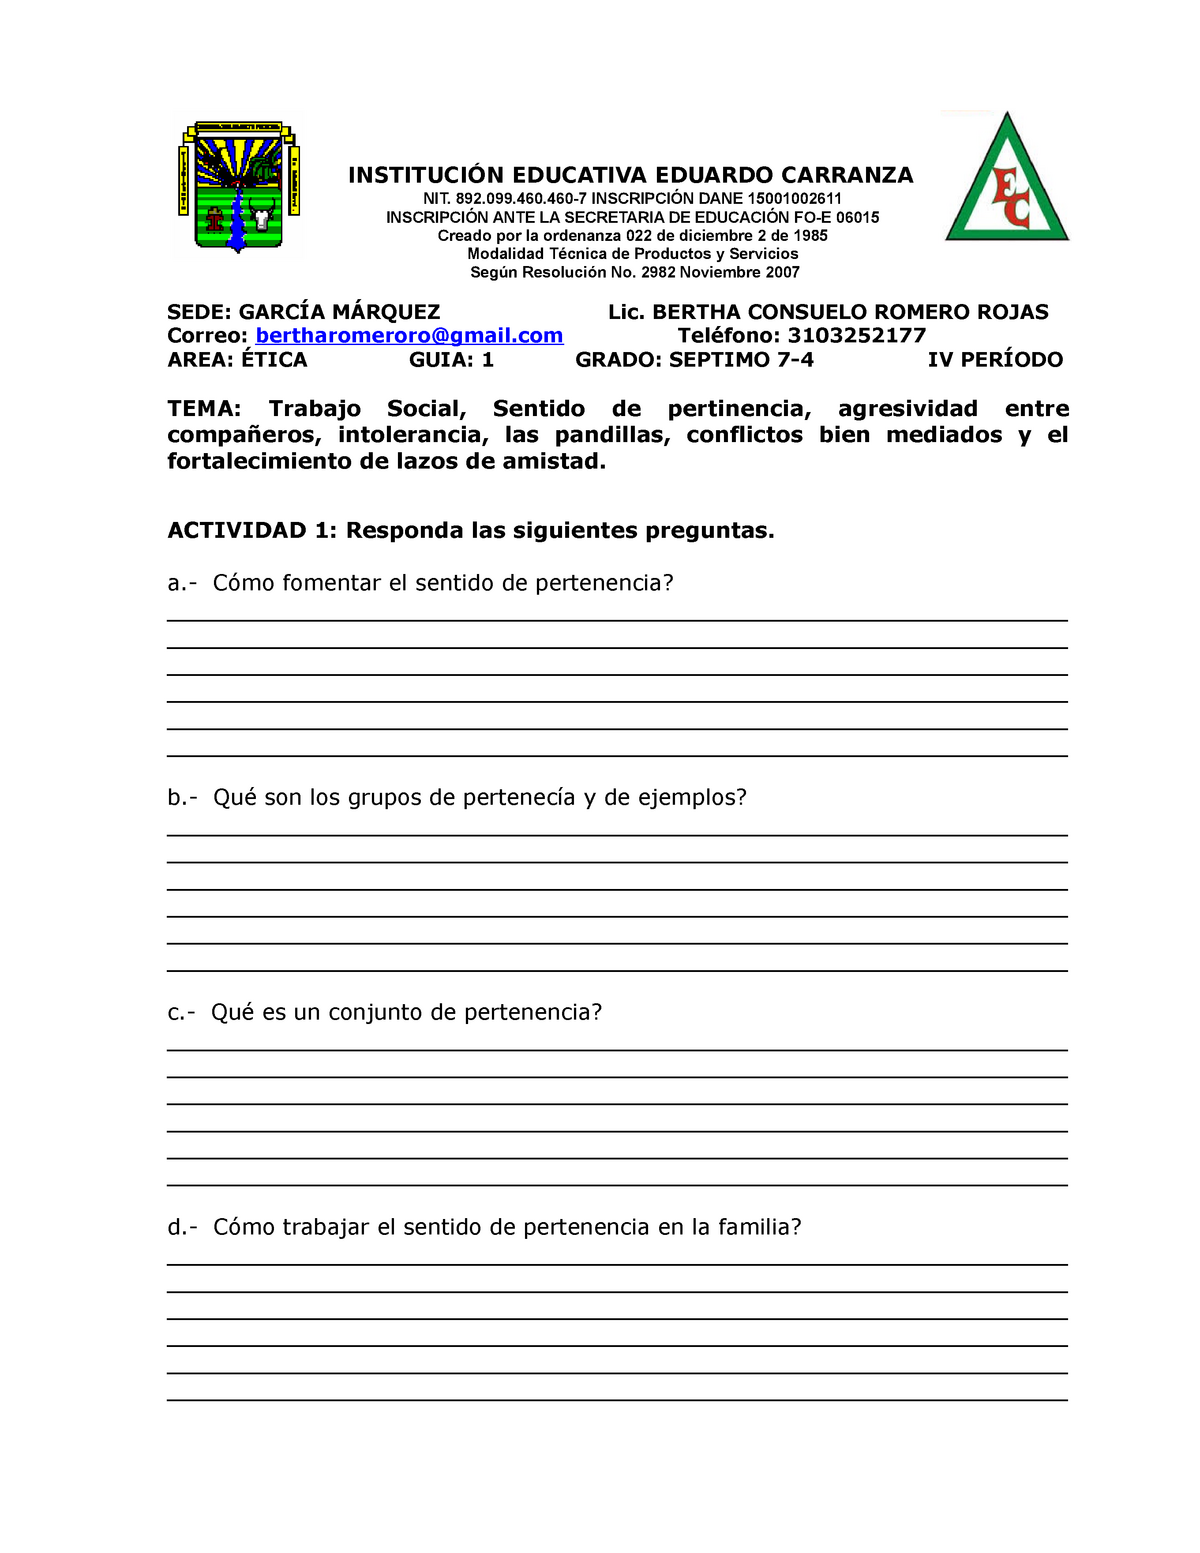 Imprimir Guia De Etica Grado 7 4 N° 1 Iv Periodo InstituciÓn Educativa Eduardo Carranza Nit 6183